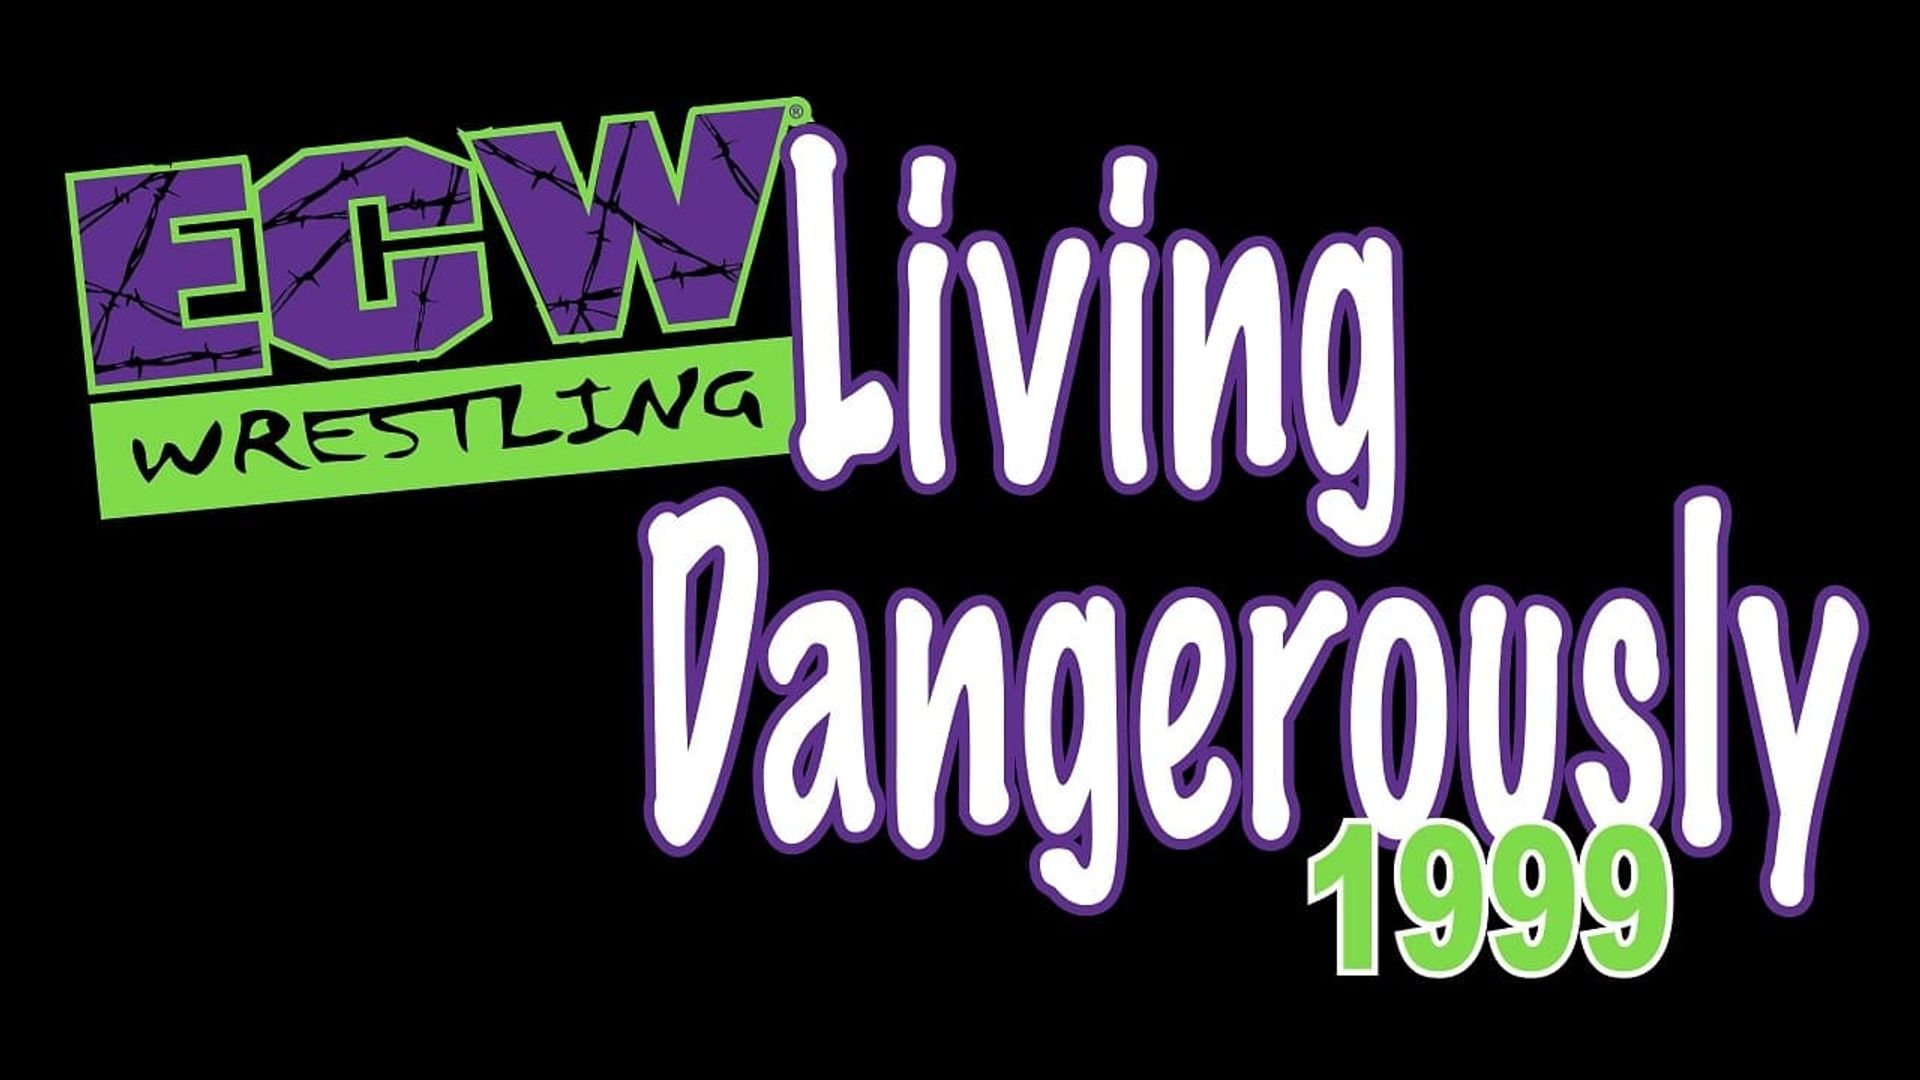 ECW Living Dangerously '99 background